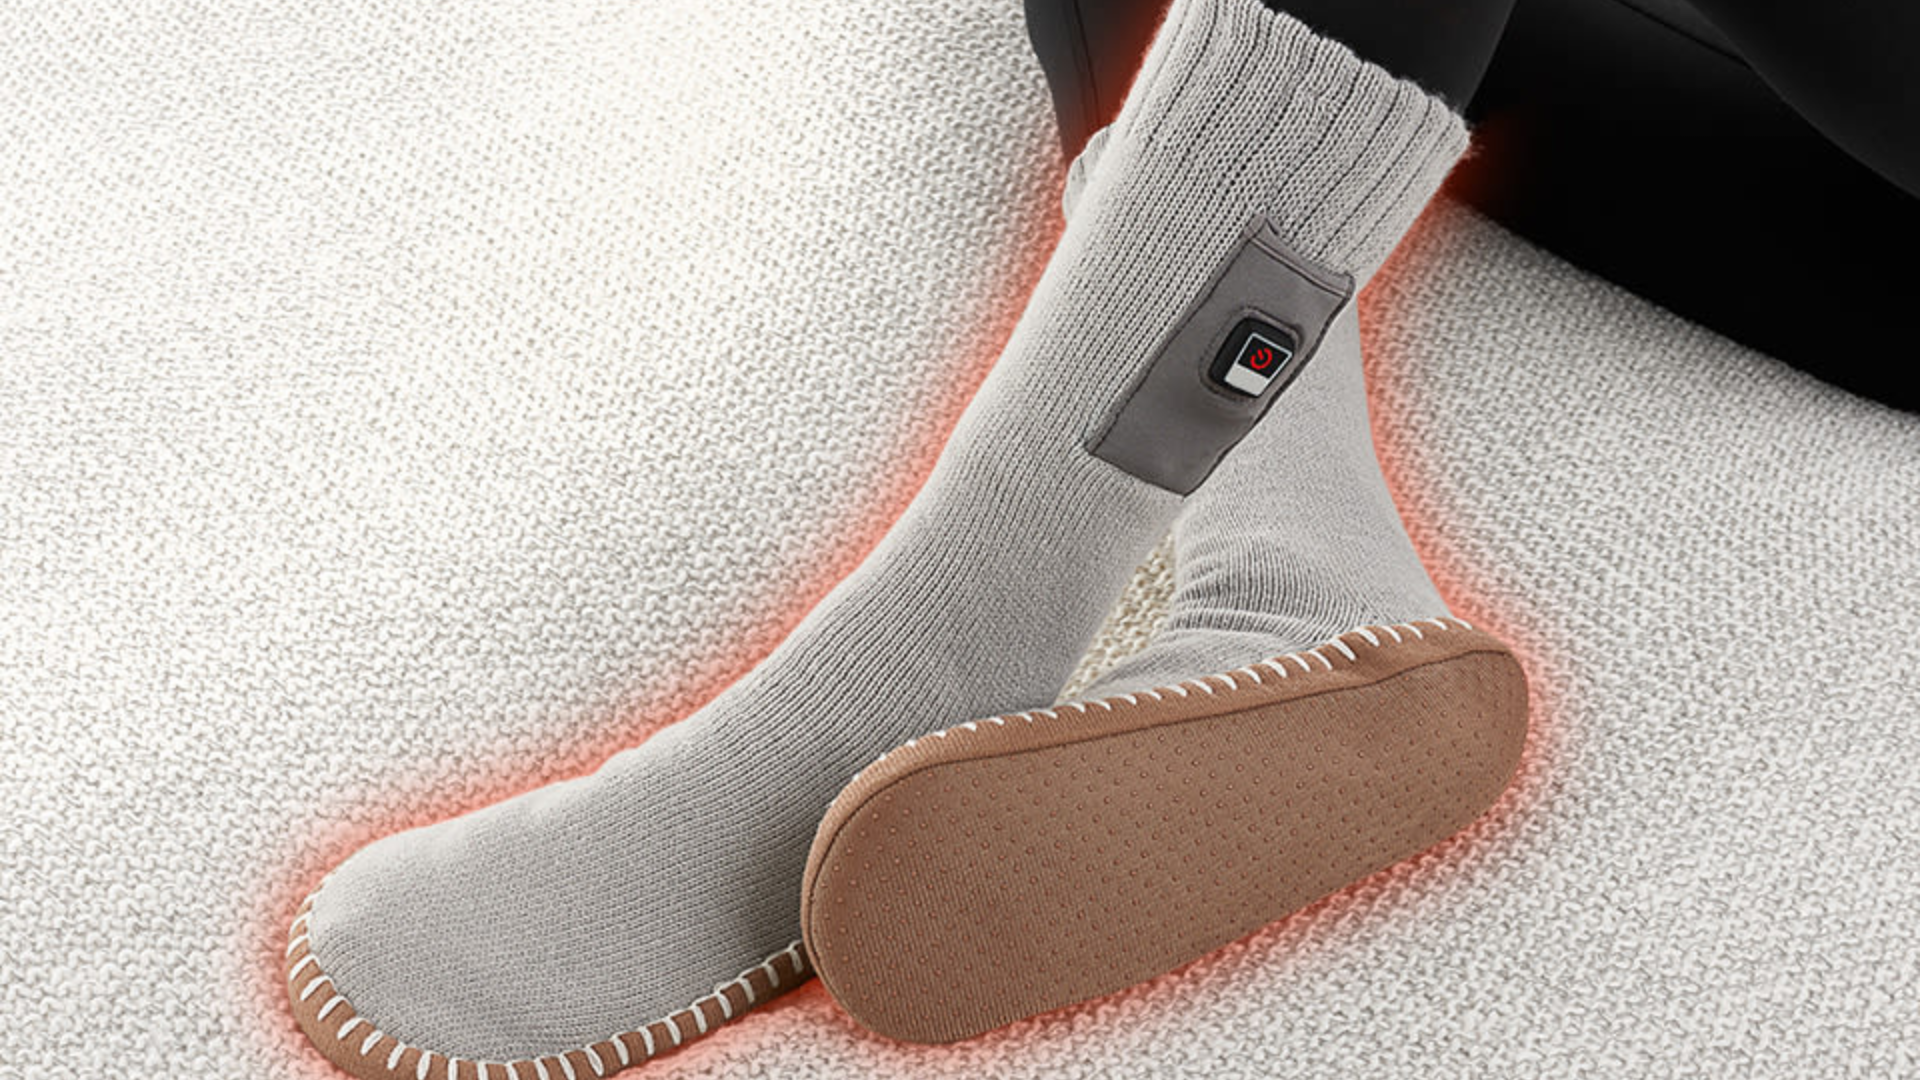 Keep your toes warm with heated socks